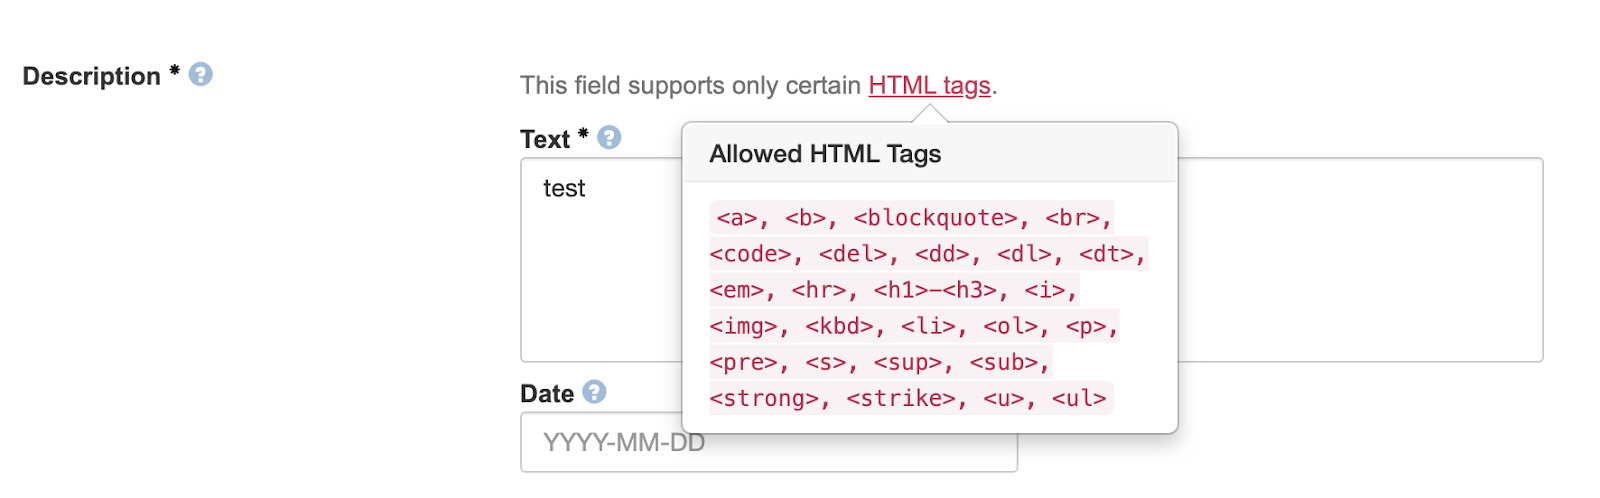 Description field Allowed HTML pop-up tag information